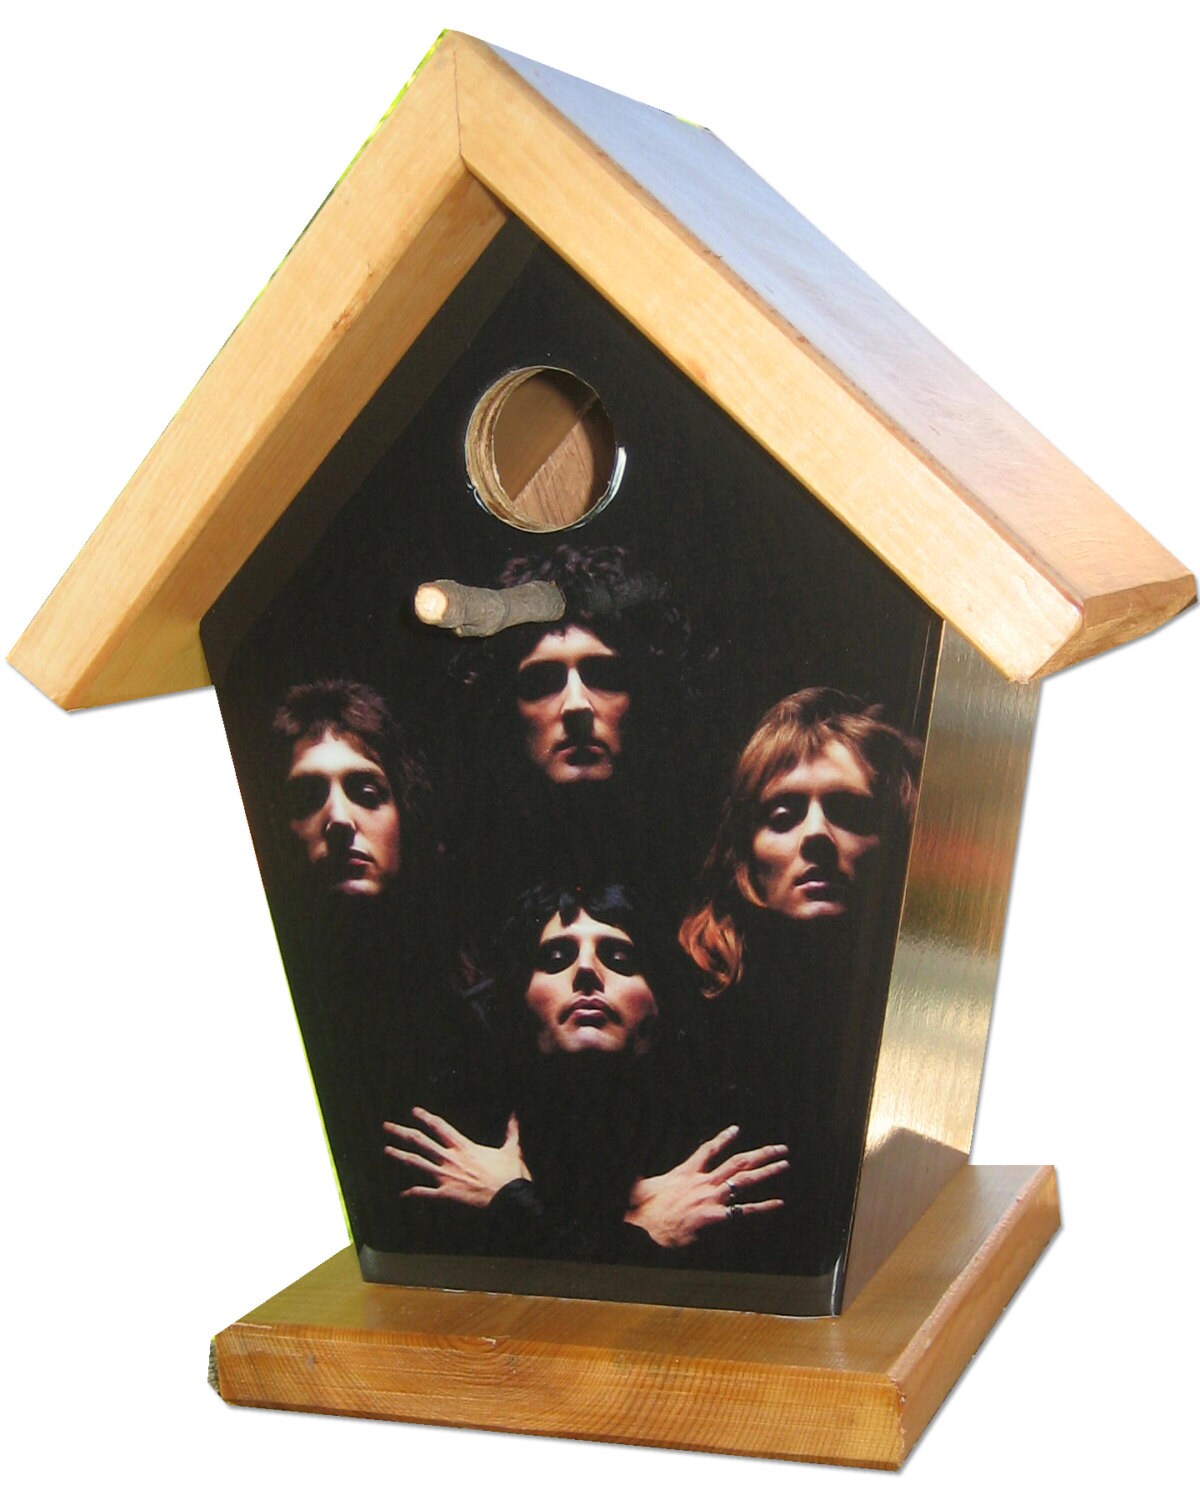 Queen Bohemian Rhapsody Birdhouse/Feeder